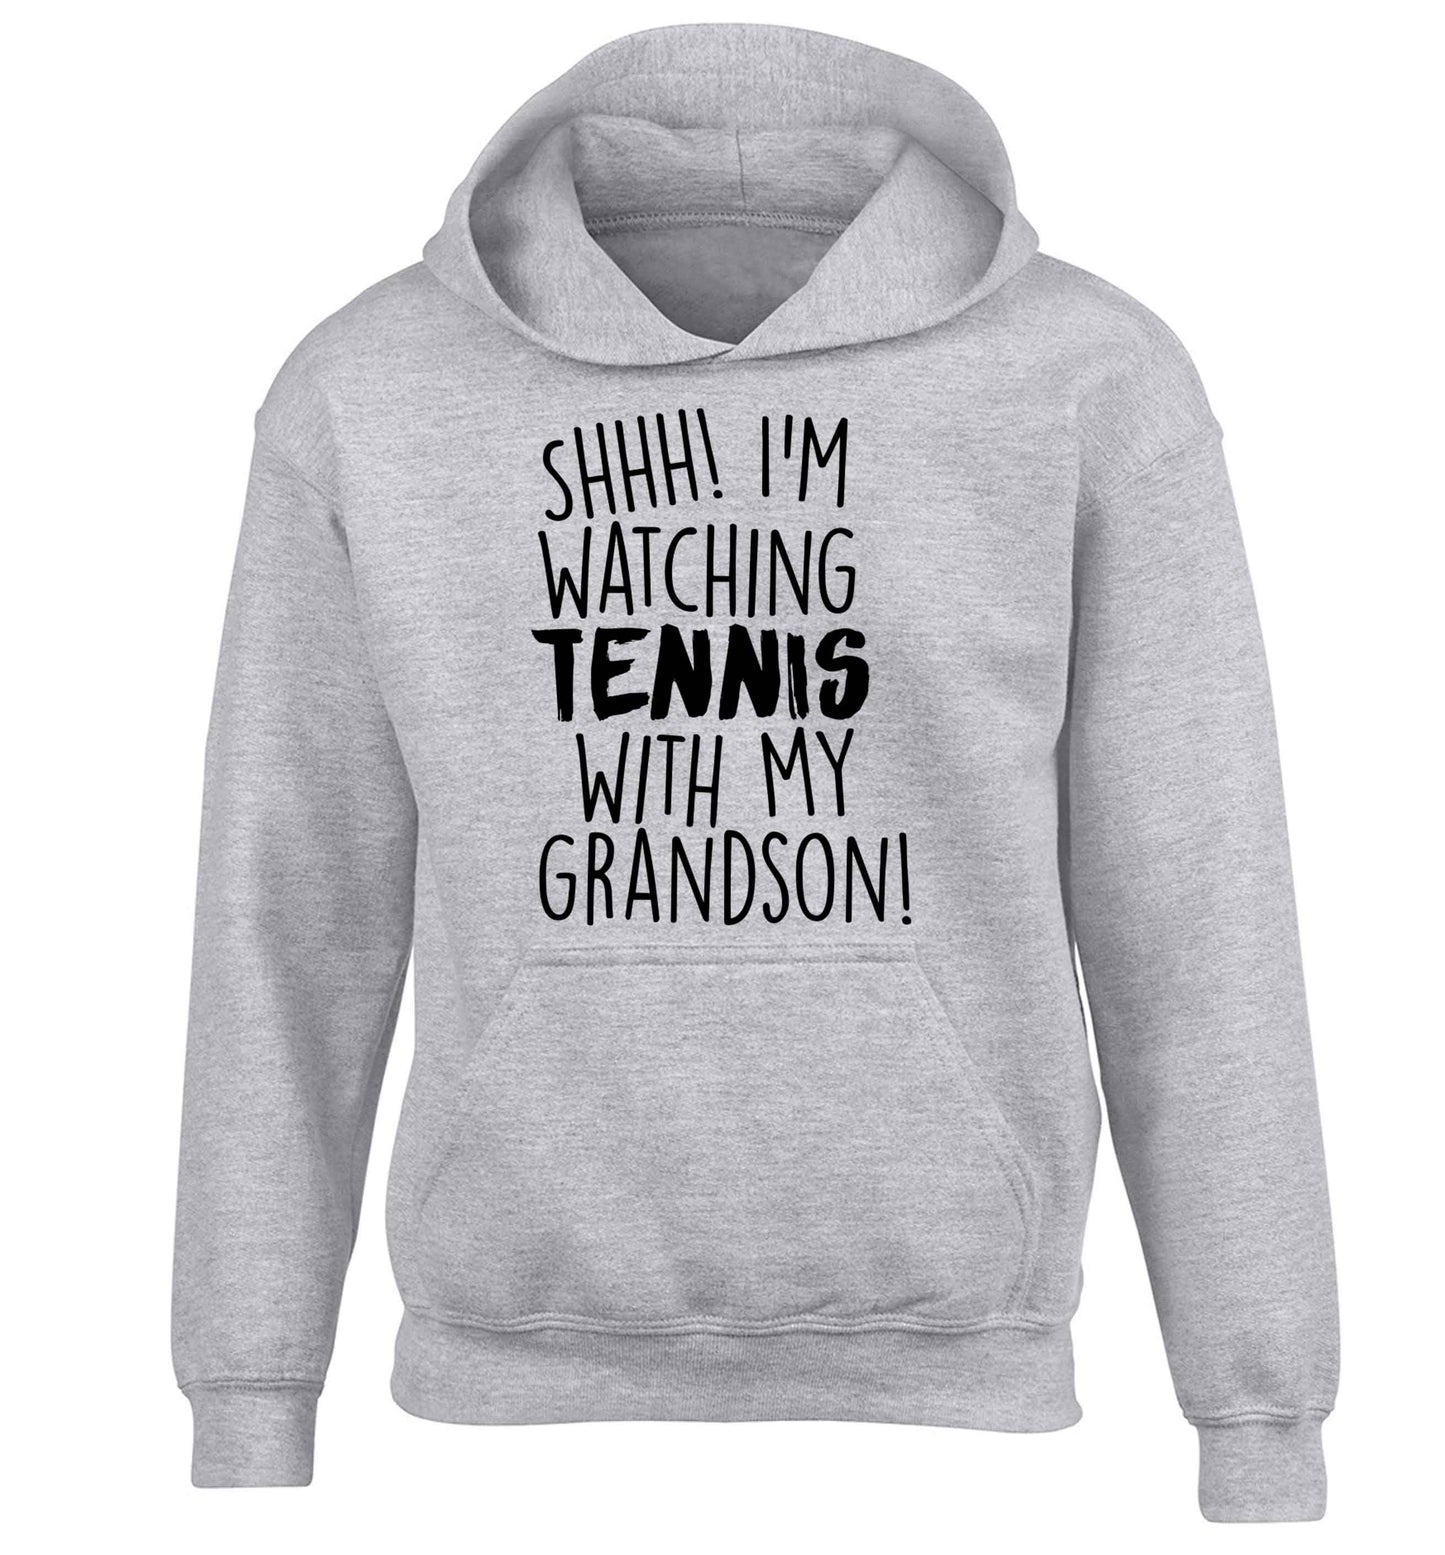 Shh! I'm watching tennis with my grandson! children's grey hoodie 12-13 Years